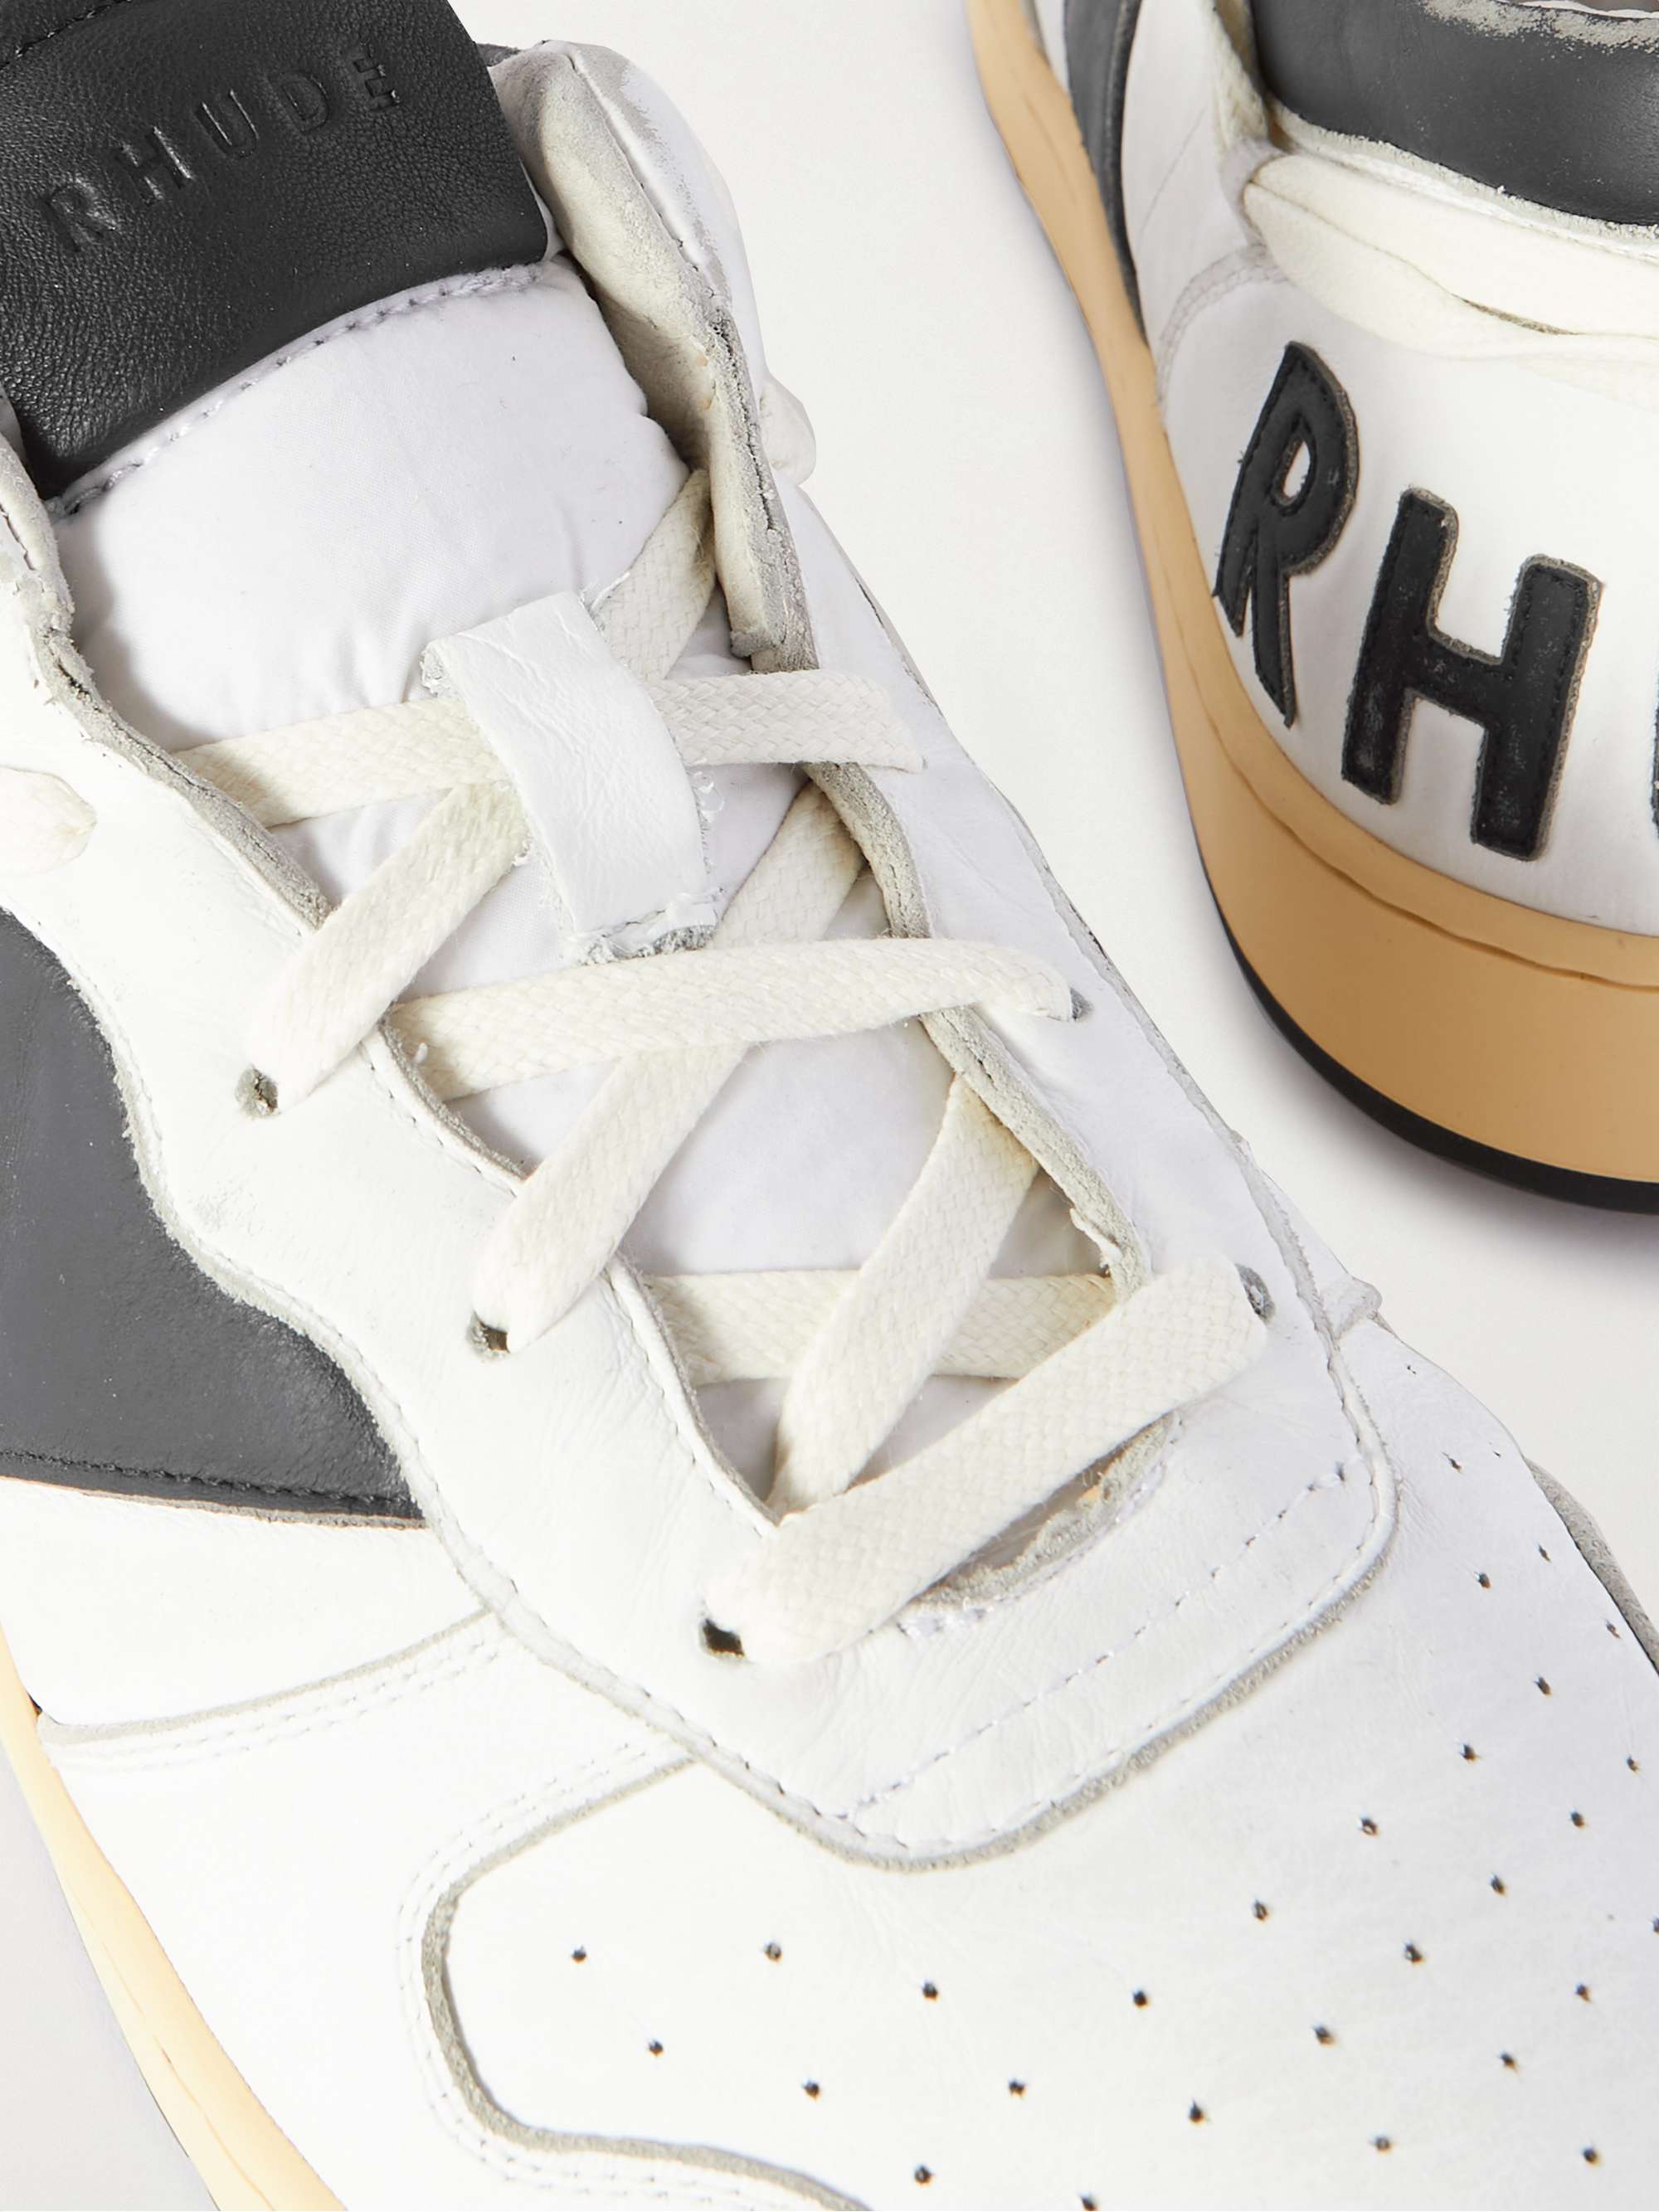 RHUDE Rhecess Logo-Appliquéd Distressed Leather Sneakers